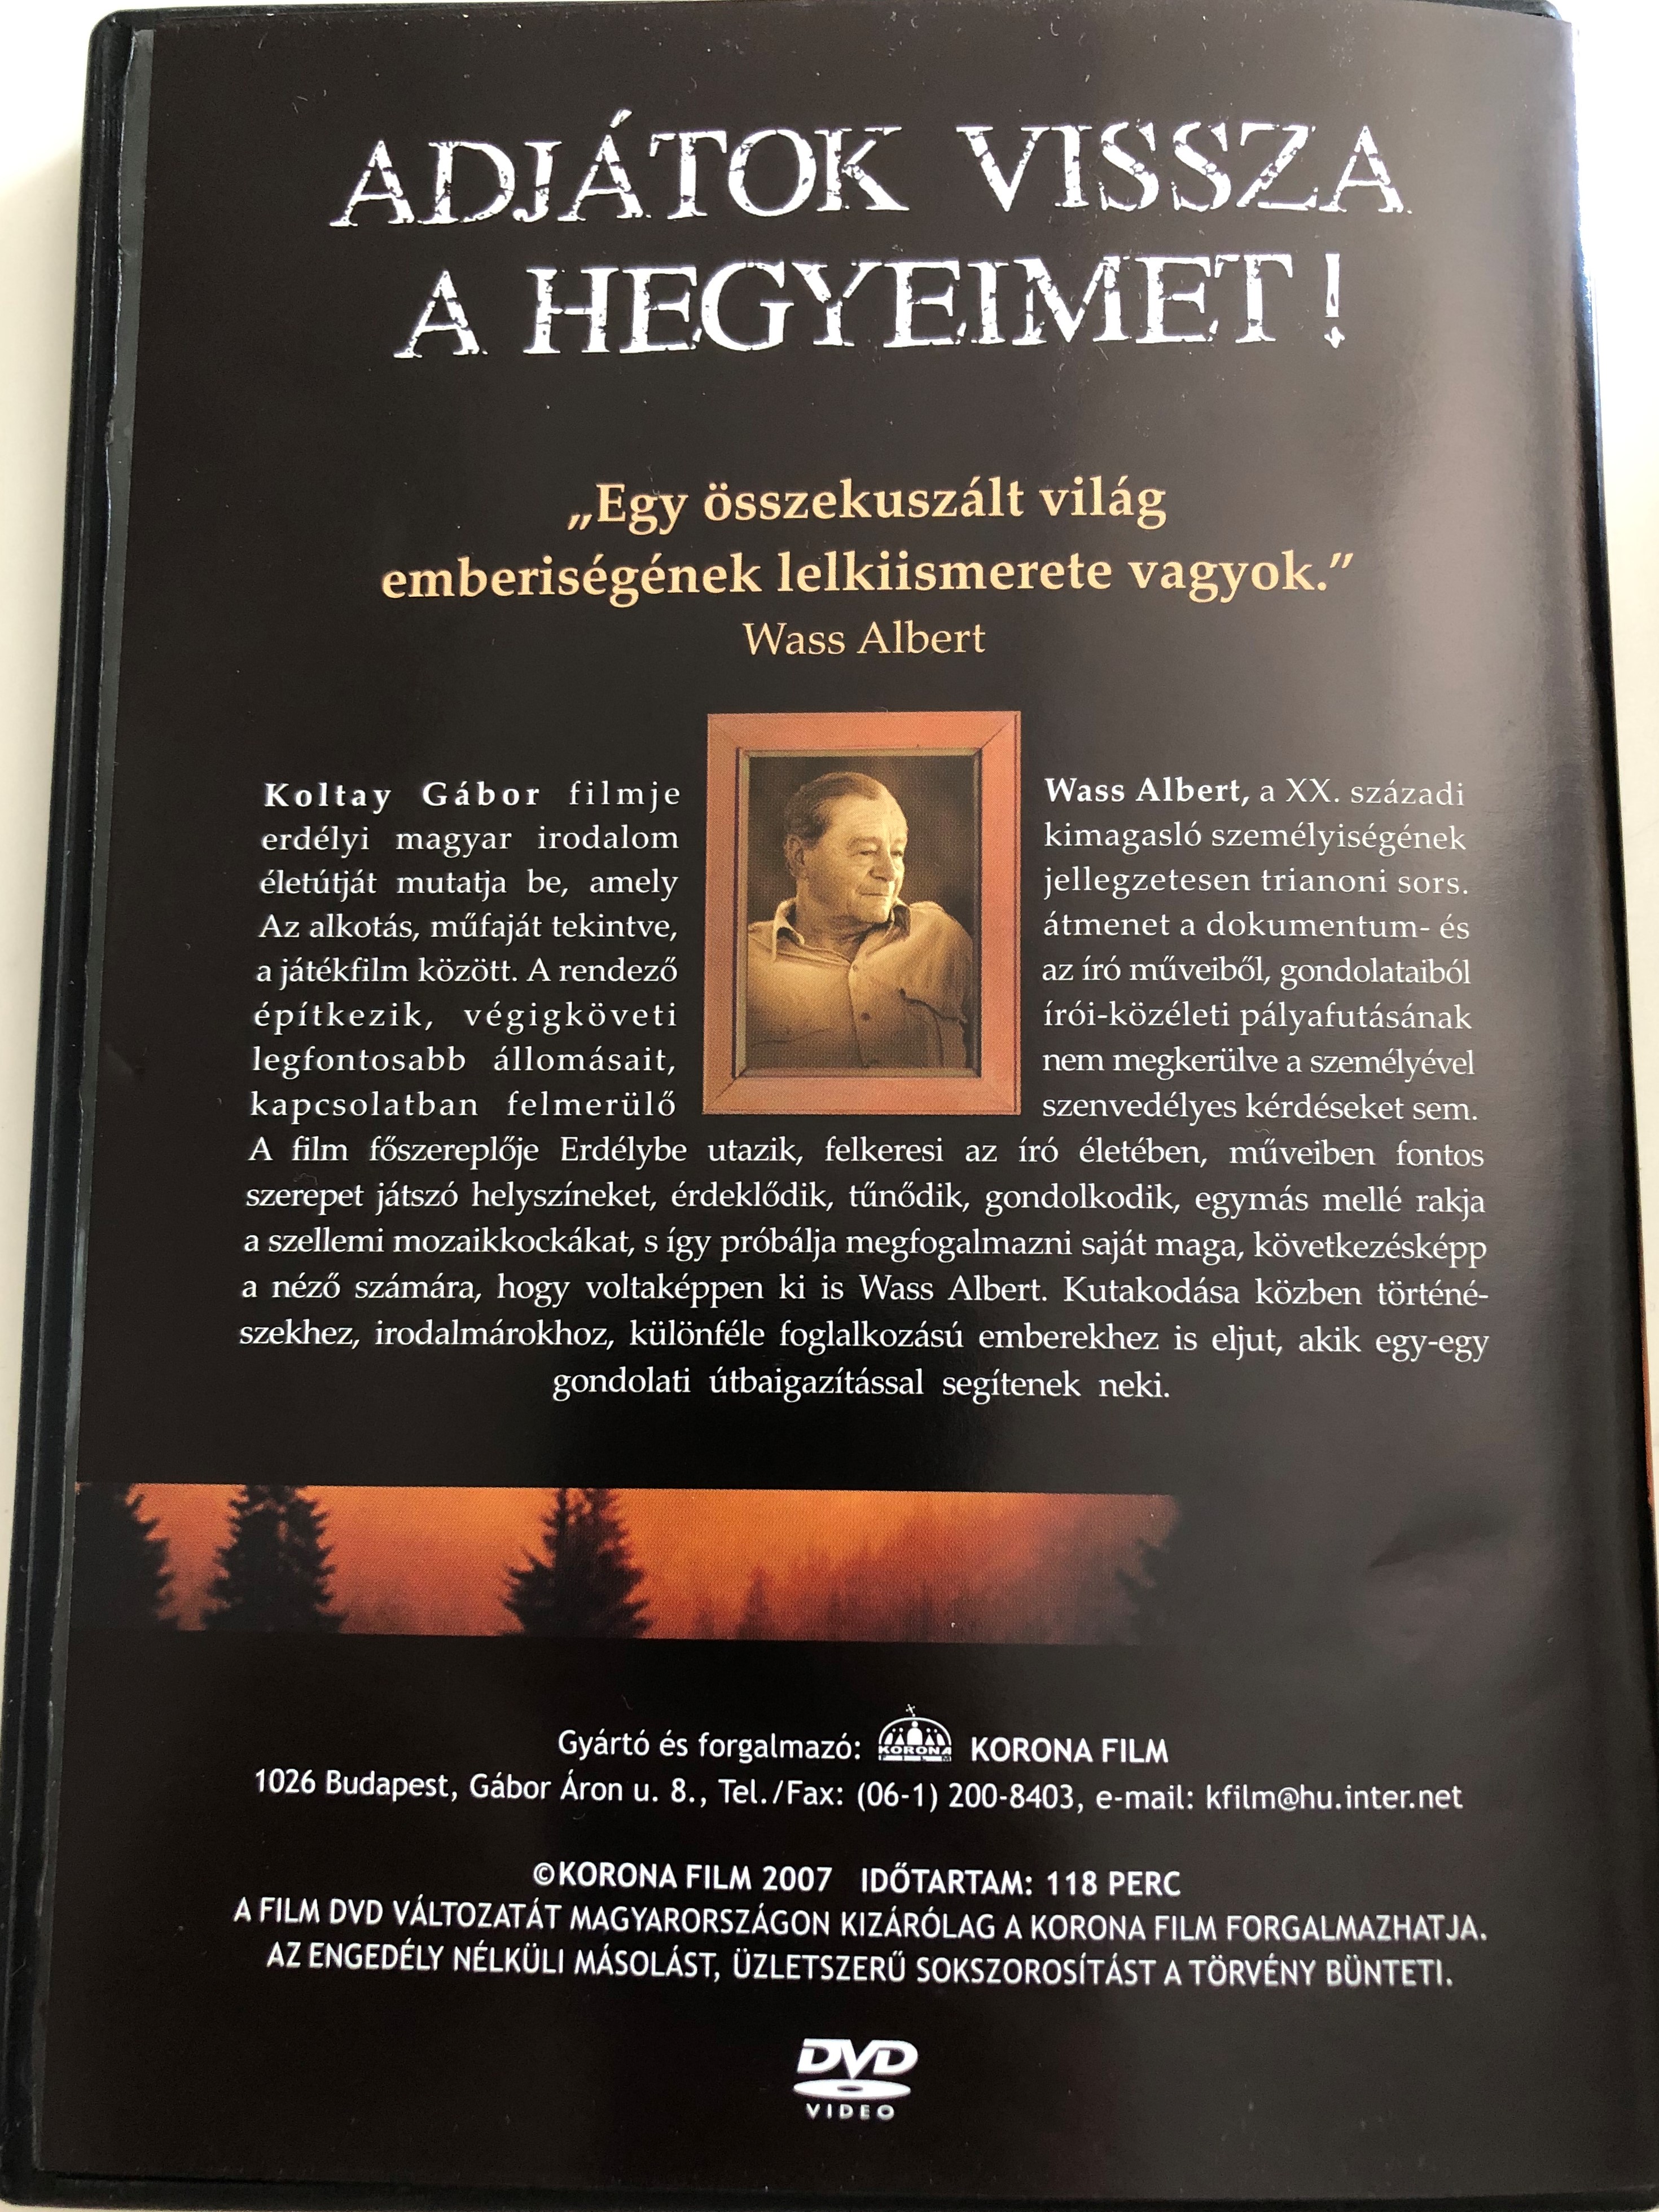 adj-tok-vissza-a-hegyeimet-dvd-2007-directed-by-g-bor-koltay-starring-r-k-si-k-roly-biographical-film-about-albert-wass-hungarian-writer-from-transylvania-5-.jpg